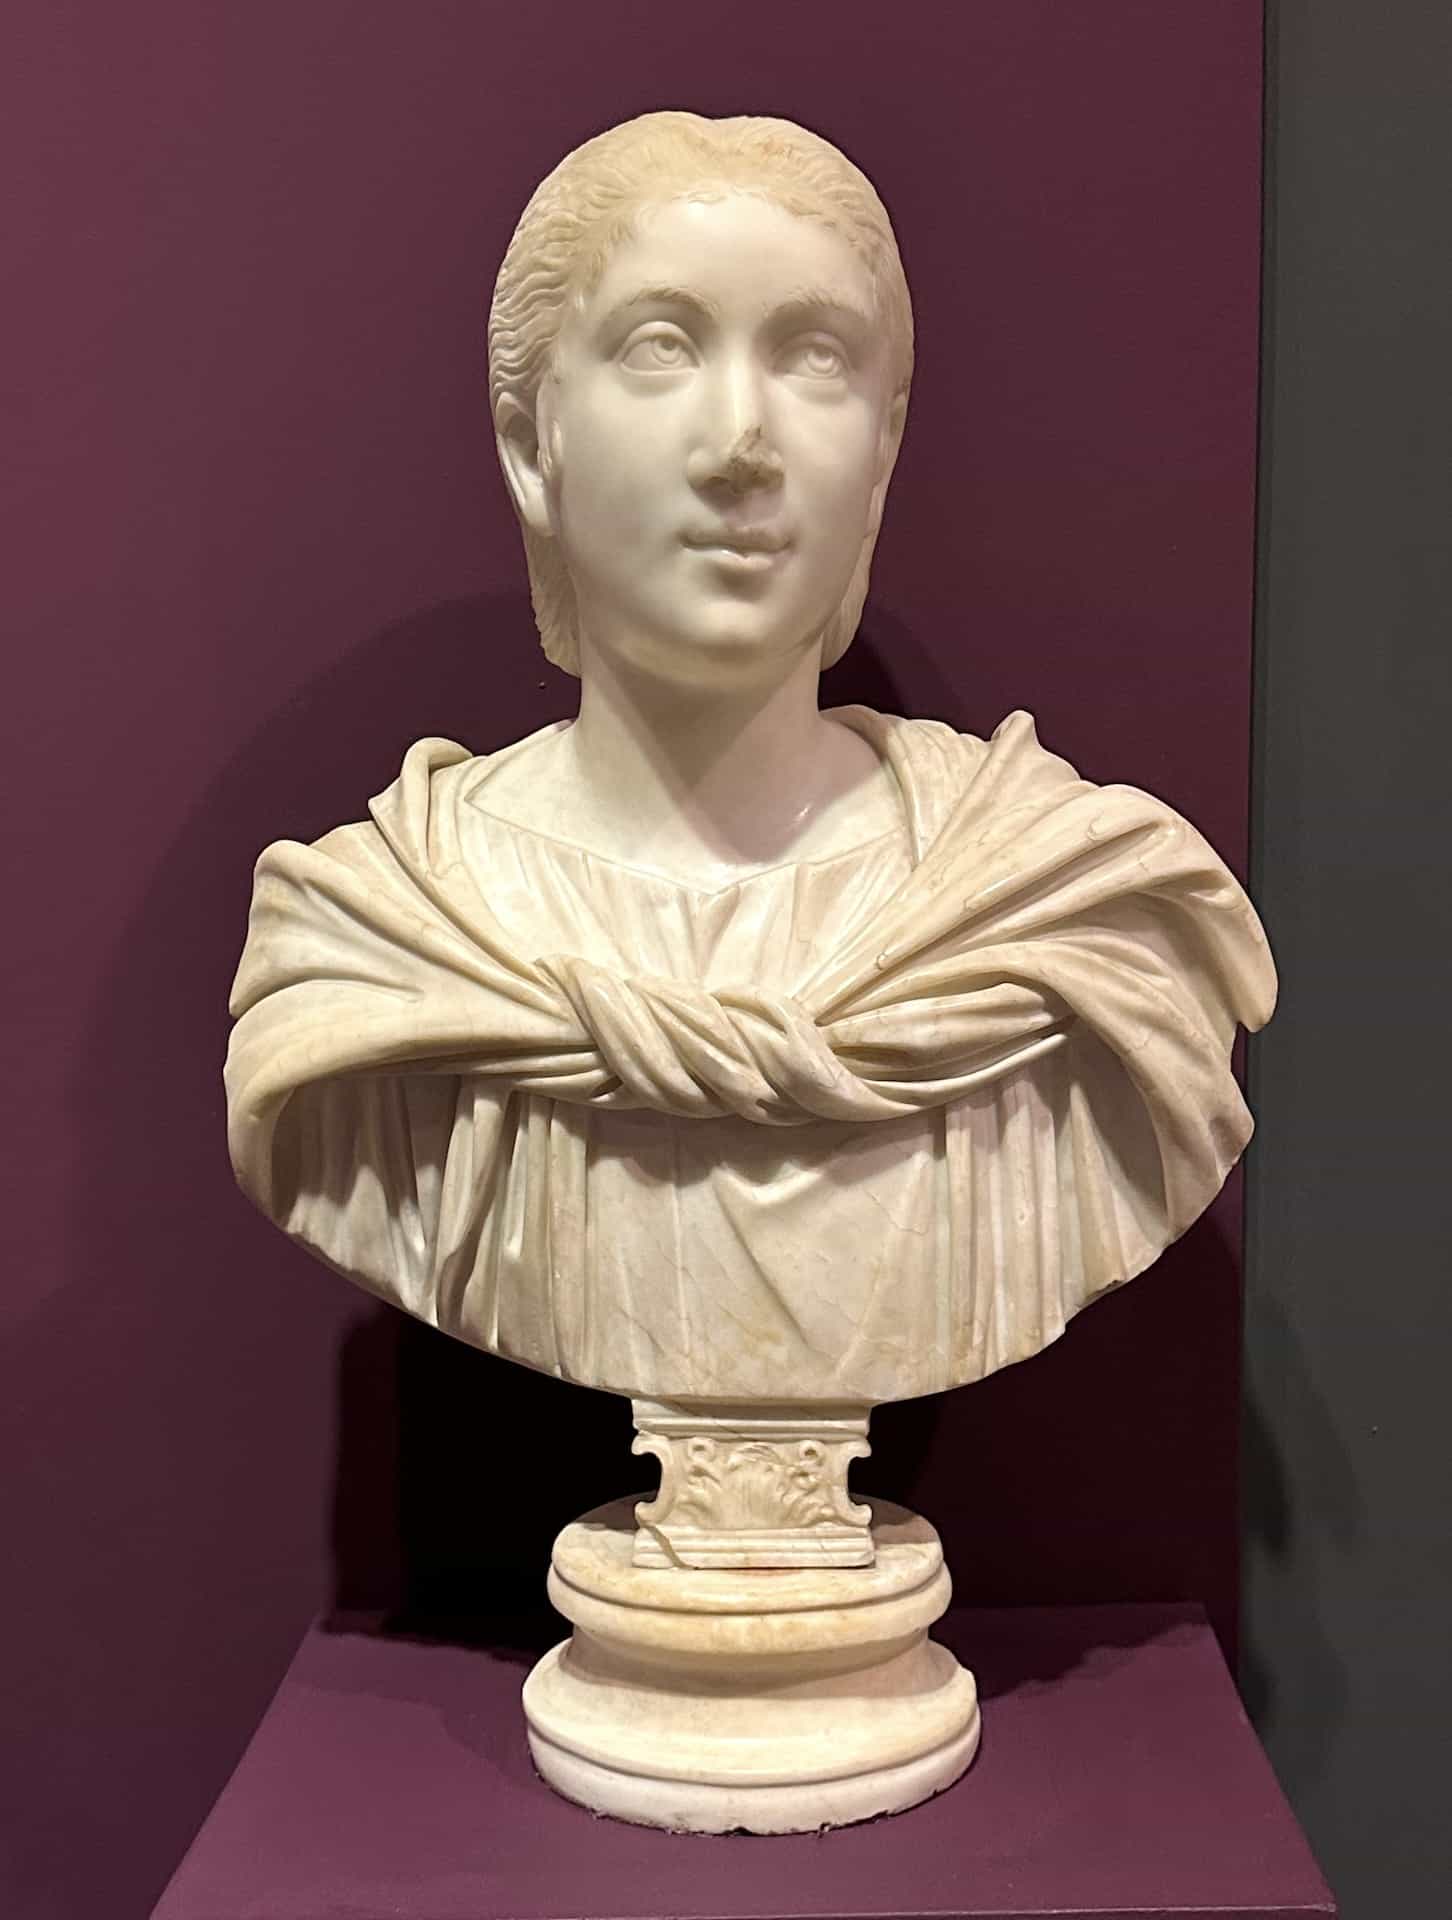 Bust of Empress Julia Paula (3rd century) at the Ephesus Museum in Selçuk, Turkey